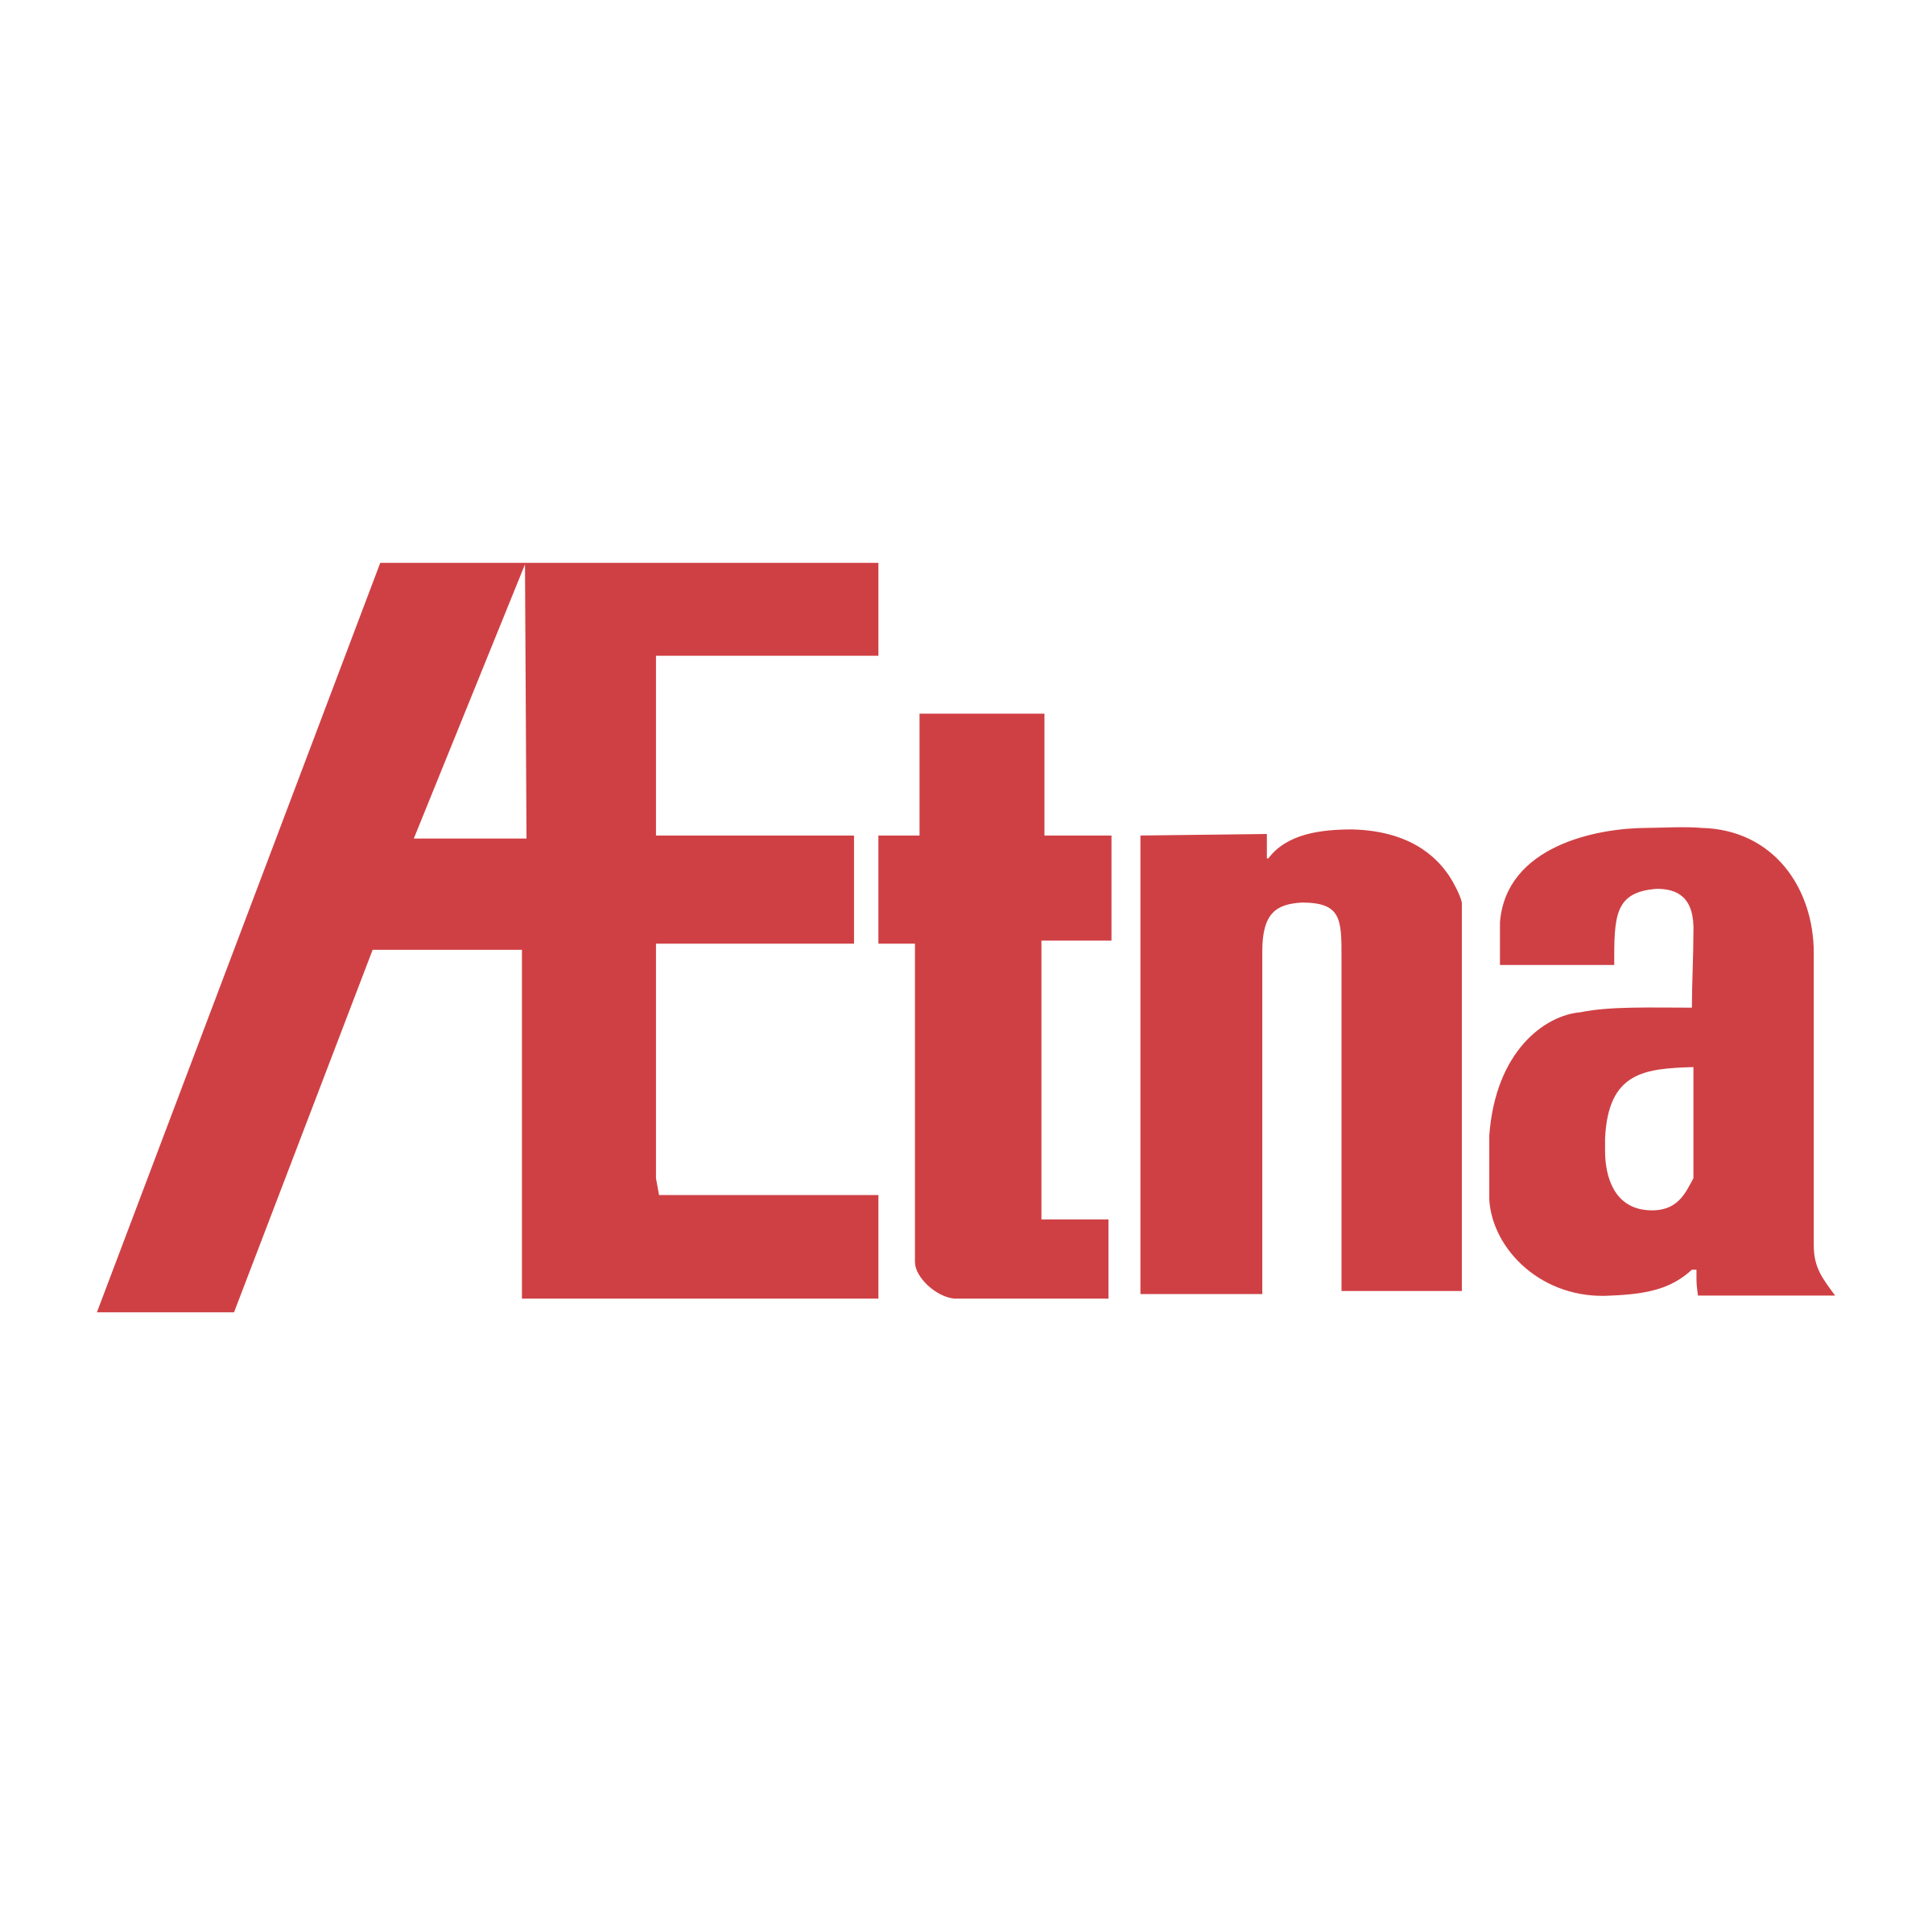 Aetna Logo - Aetna Logo PNG Transparent & SVG Vector - Freebie Supply